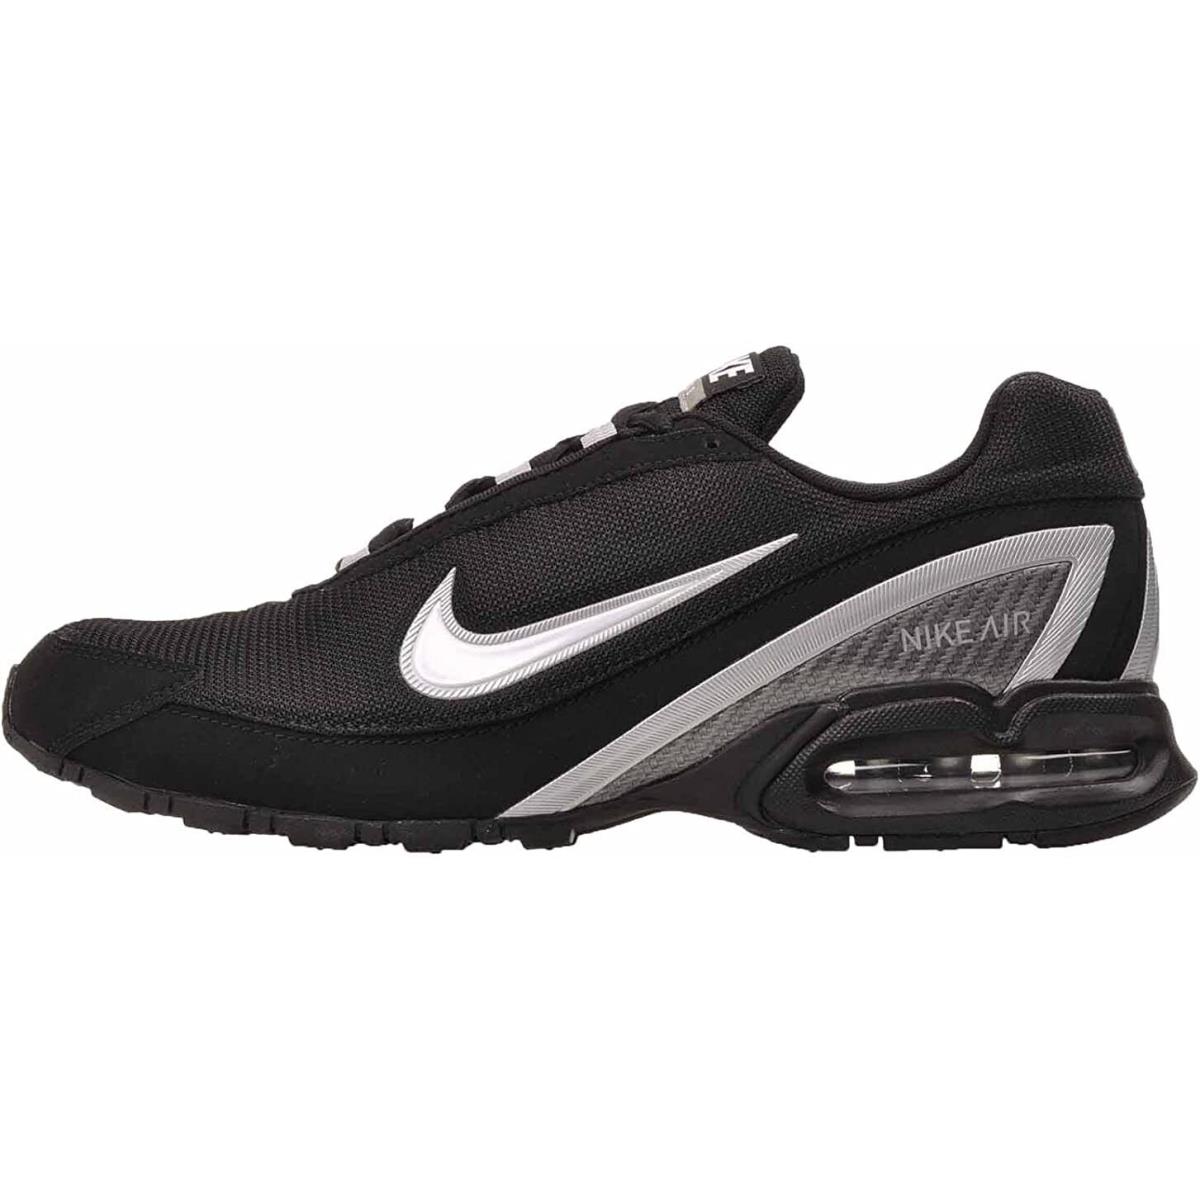 Nike Air Max Torch 3 319116-011 Men`s Black White Athletic Sneaker Shoes TV251 - Black & White